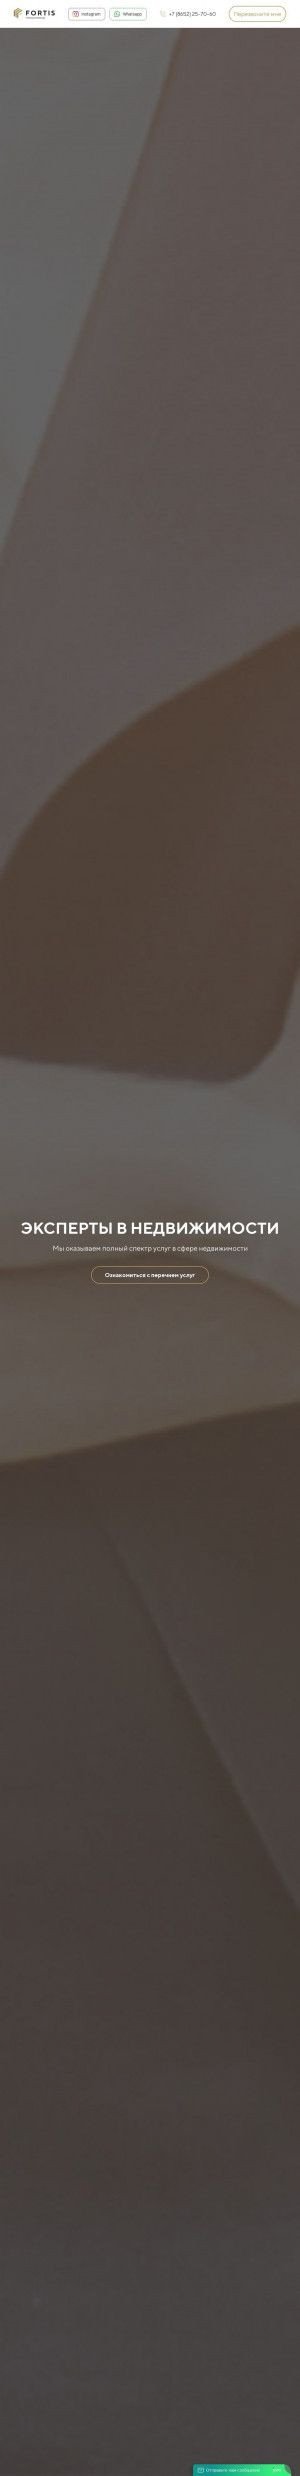 Предпросмотр для www.gk-fortis.ru — Fortis